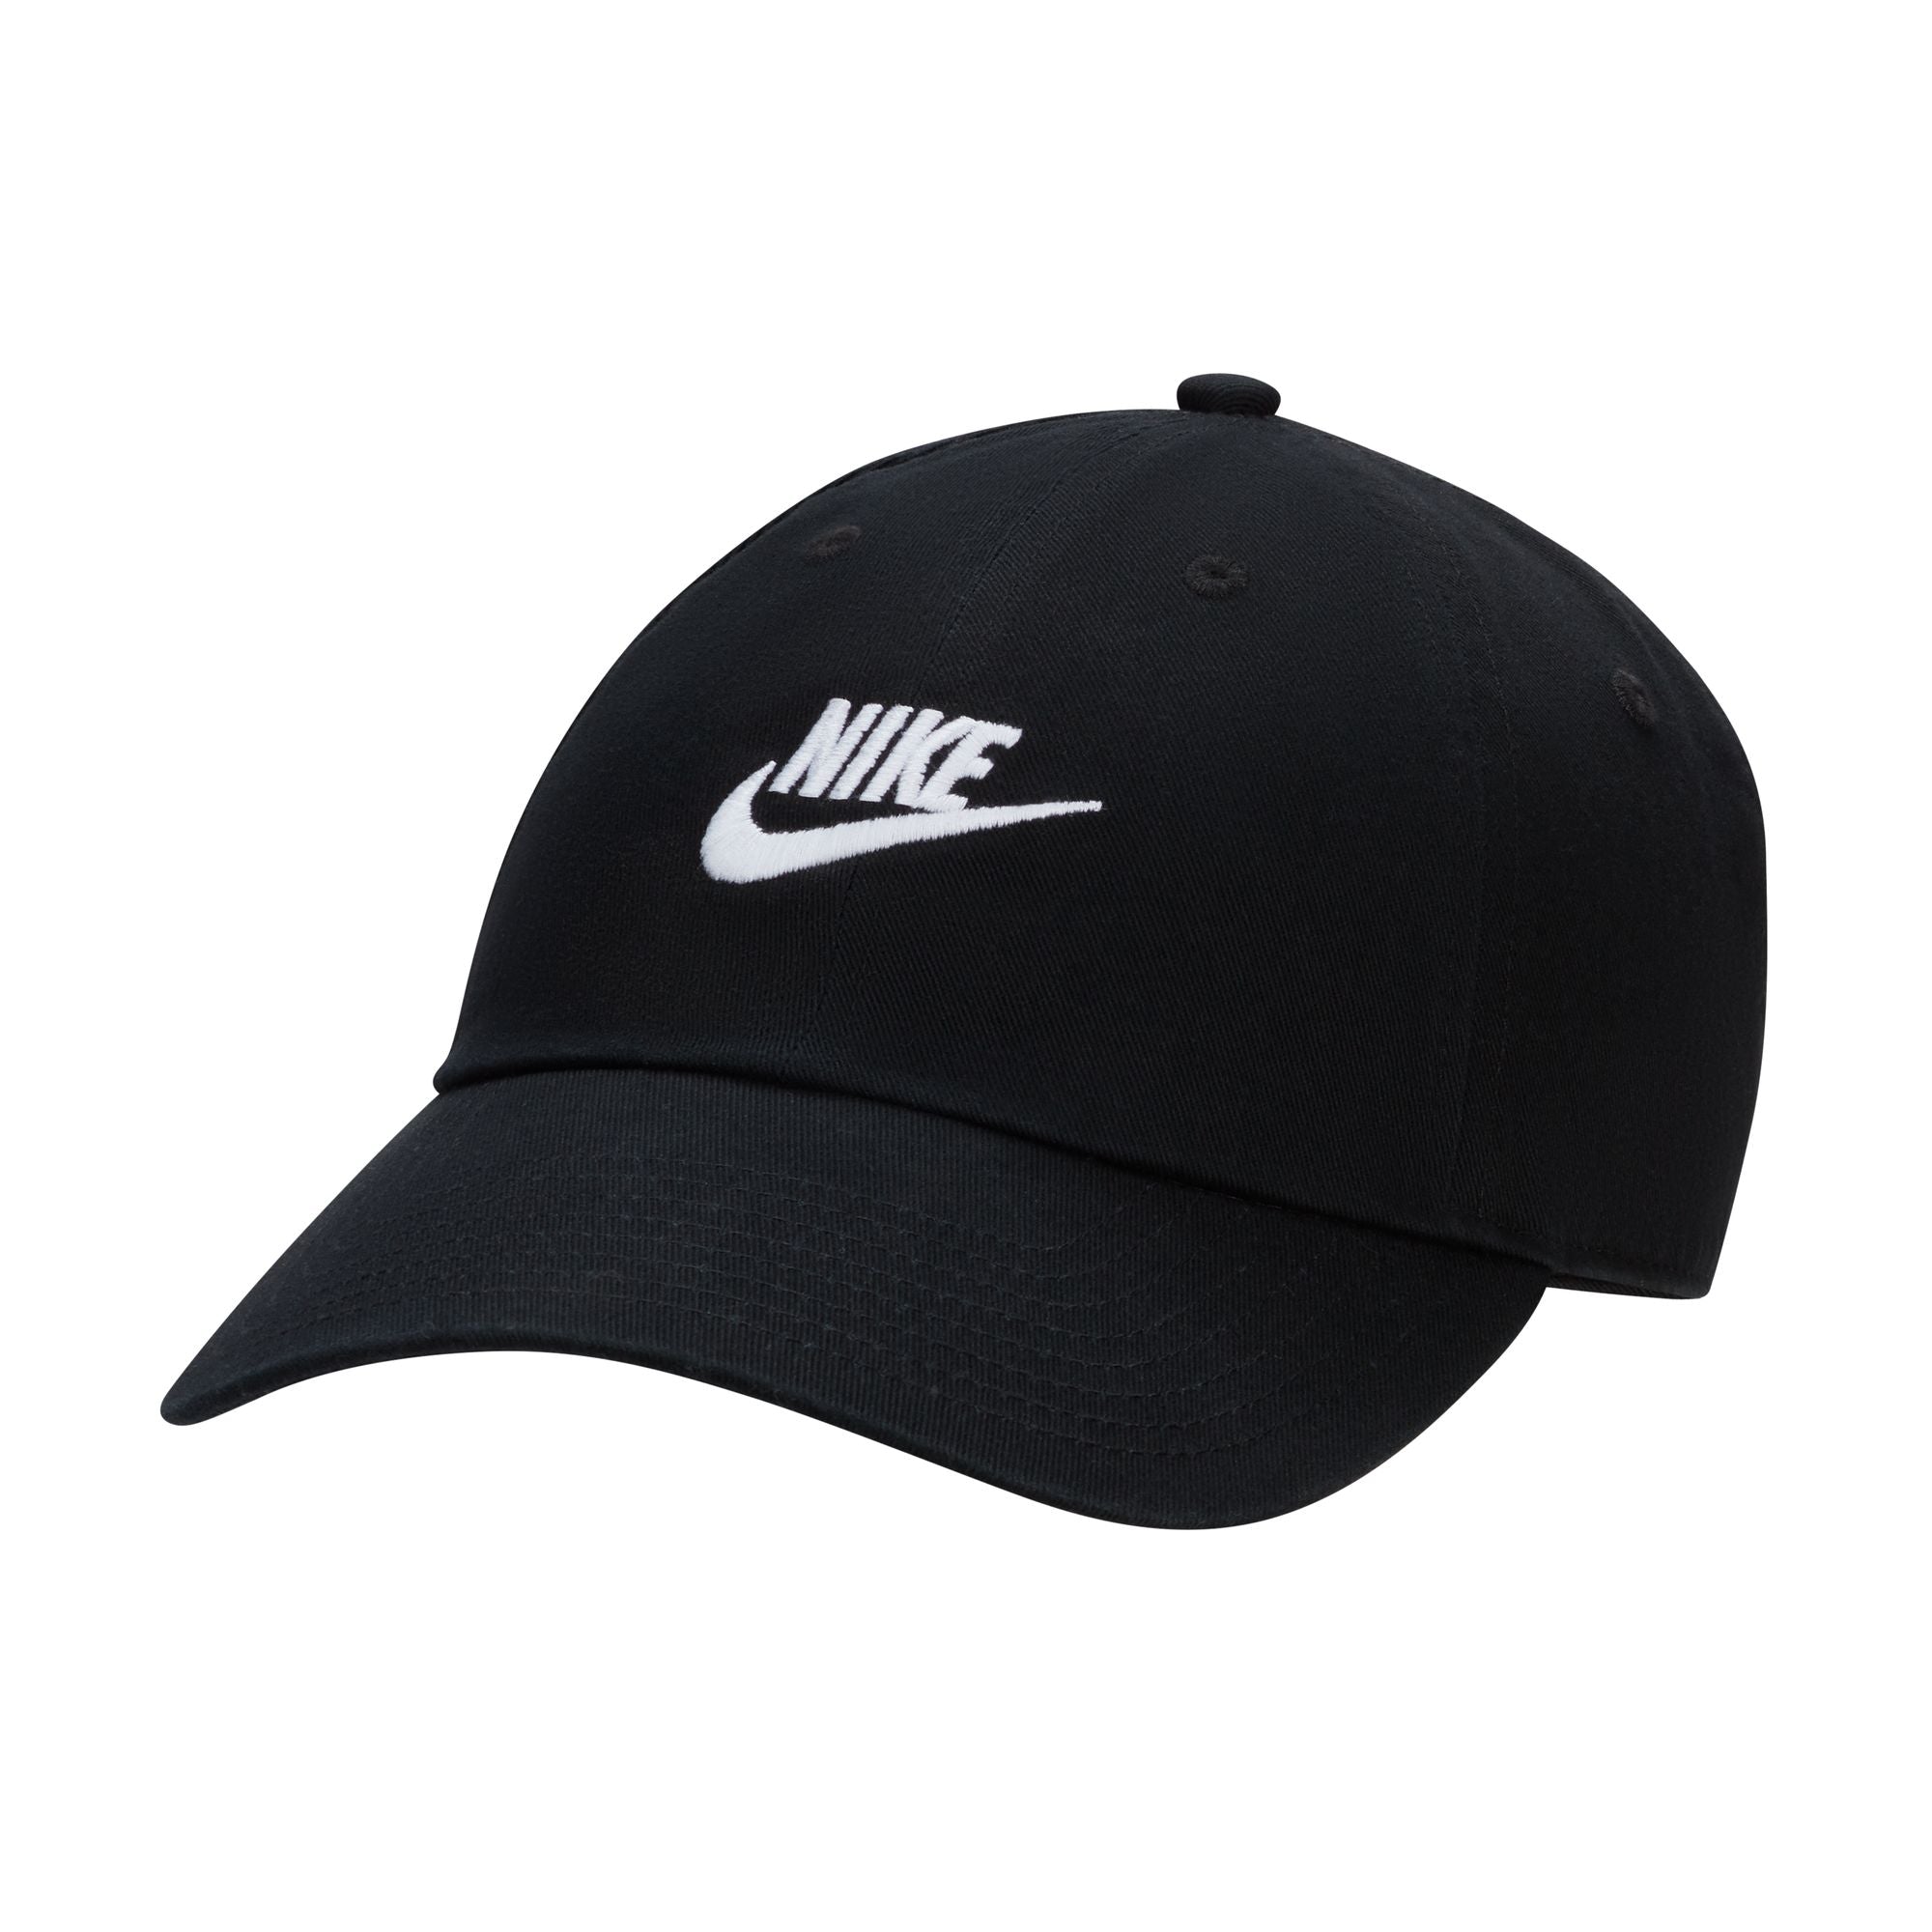 NIKE CLUB HAT (BLACK/WHITE)